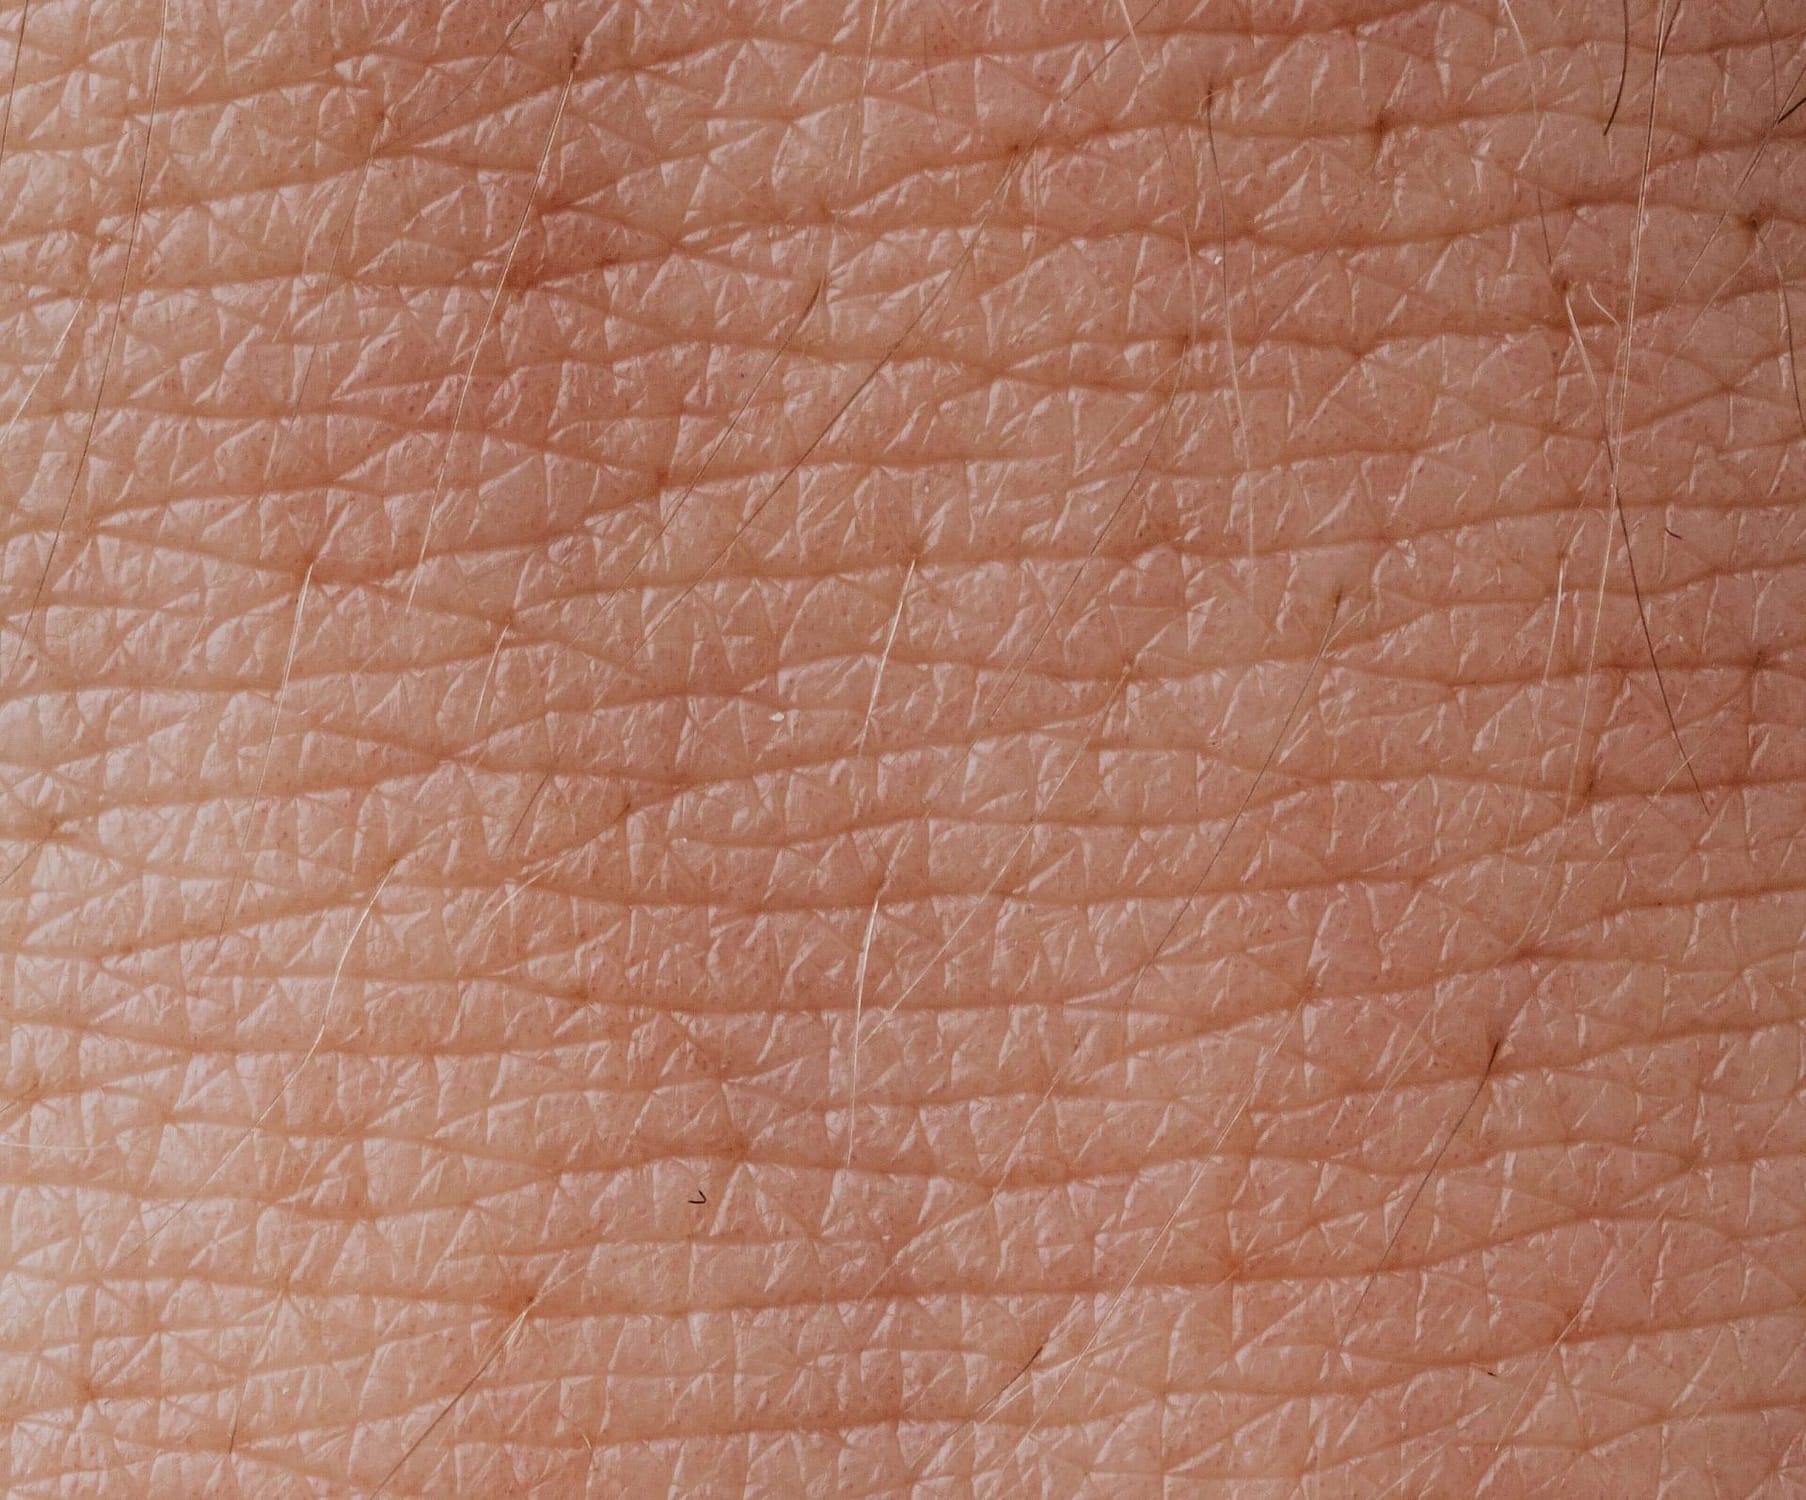 Close up photo of skin